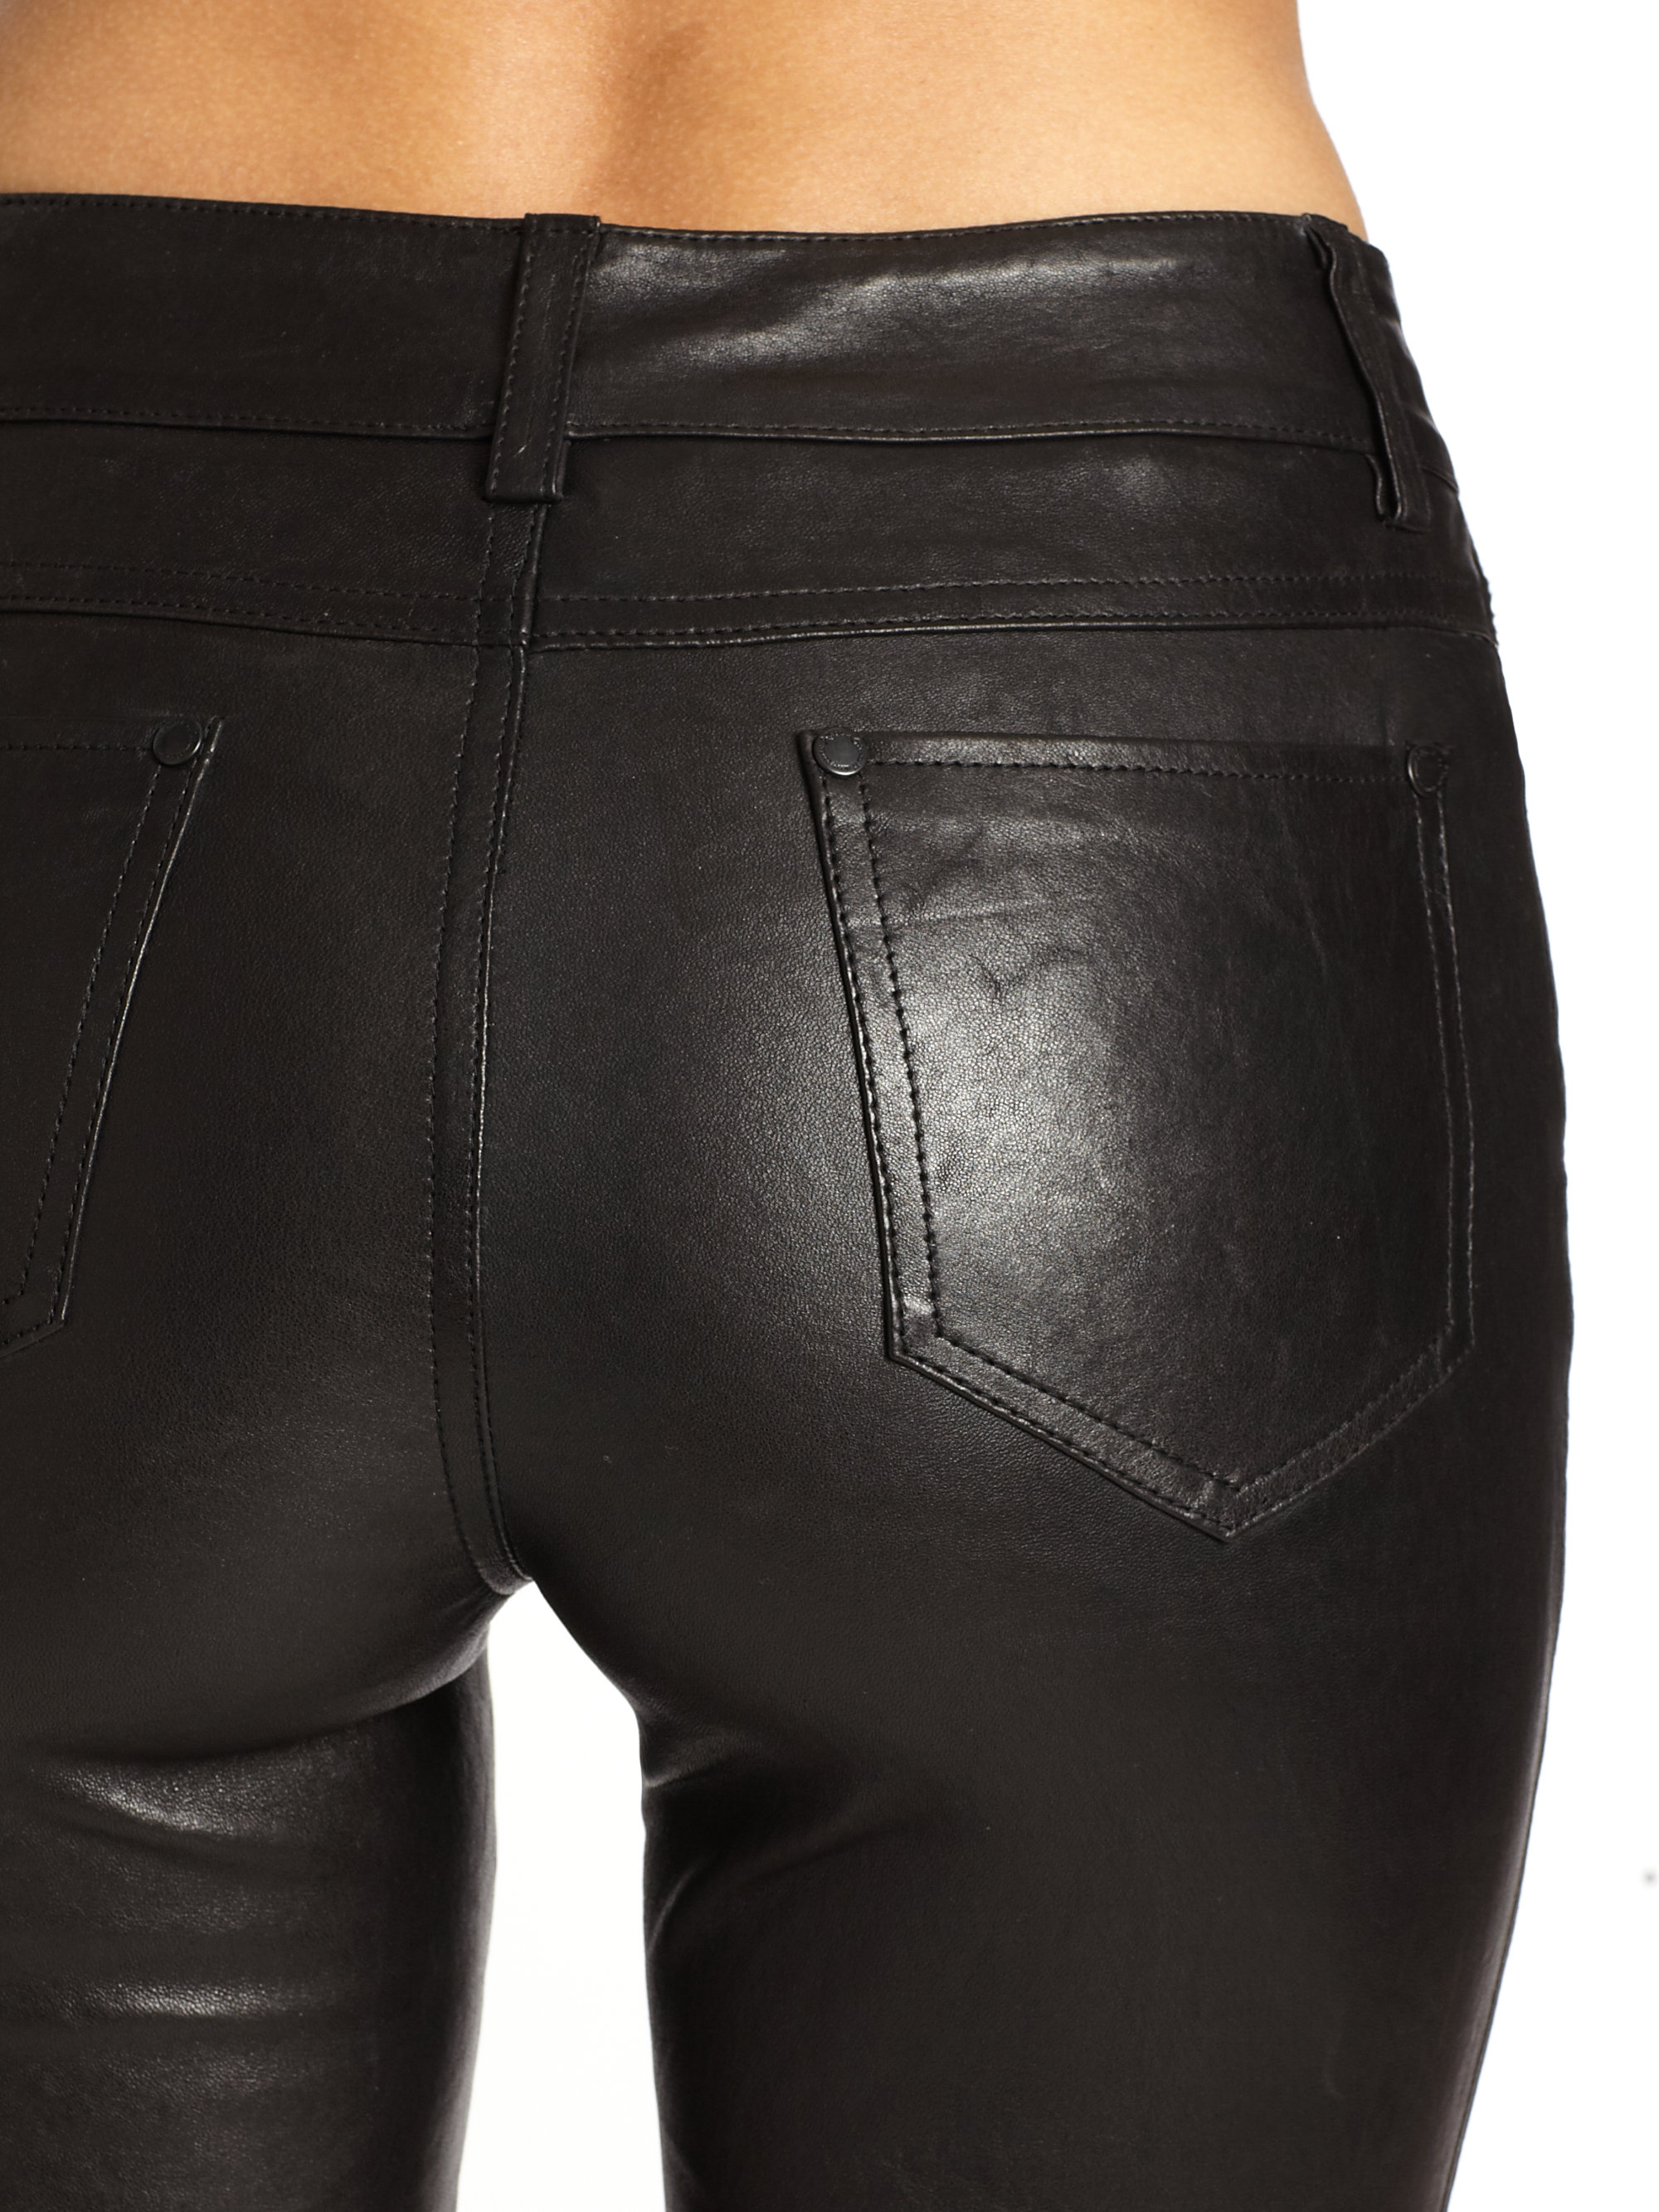 Lyst - Alice + Olivia Leather 5-Pocket Skinny Pants in Black